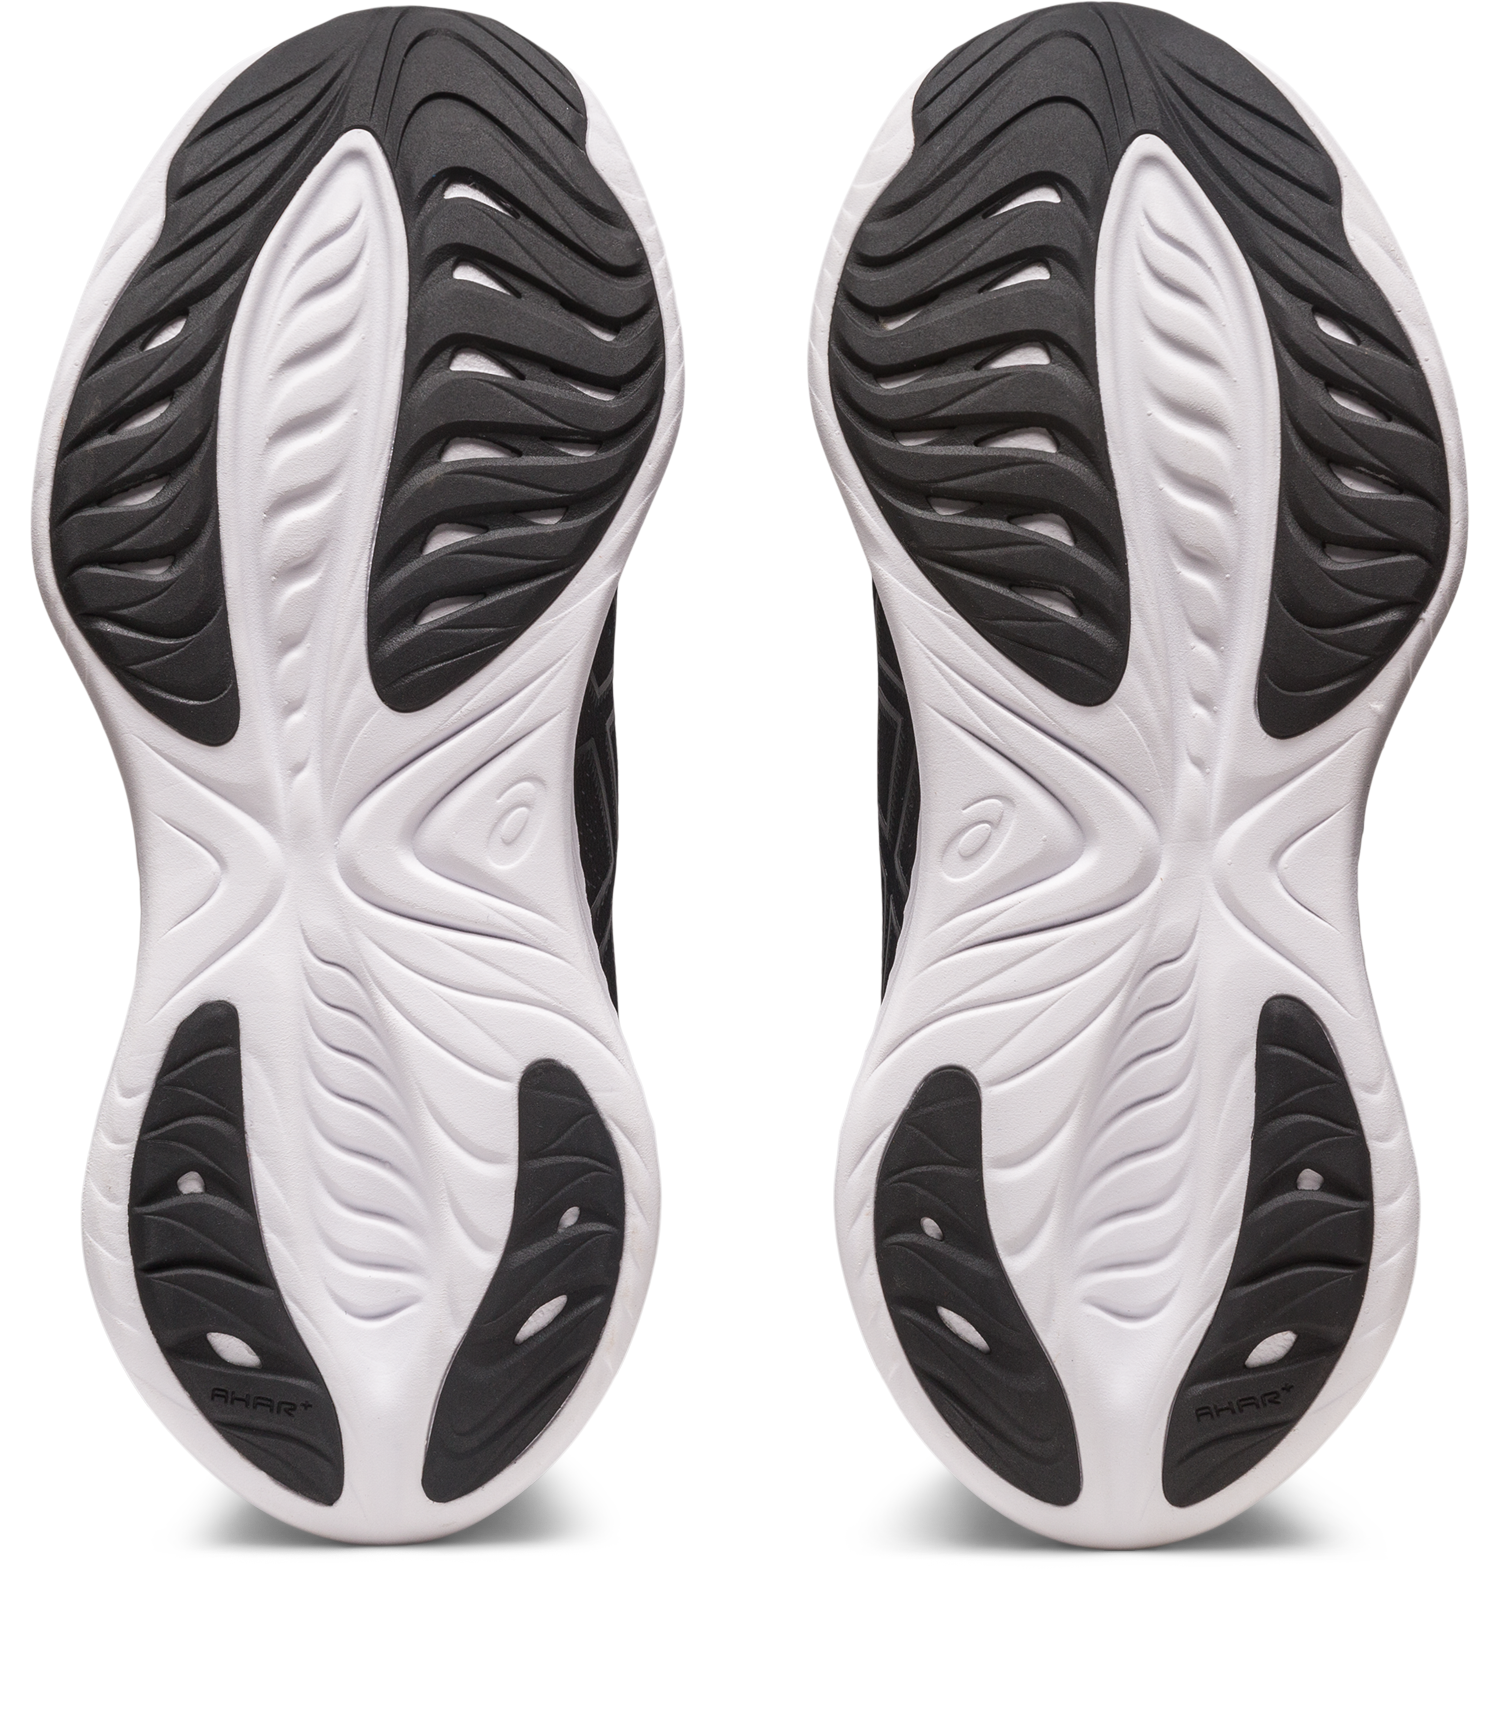 Asics Women's Gel-Cumulus 25 Wide (D) Running Shoes in Black/White